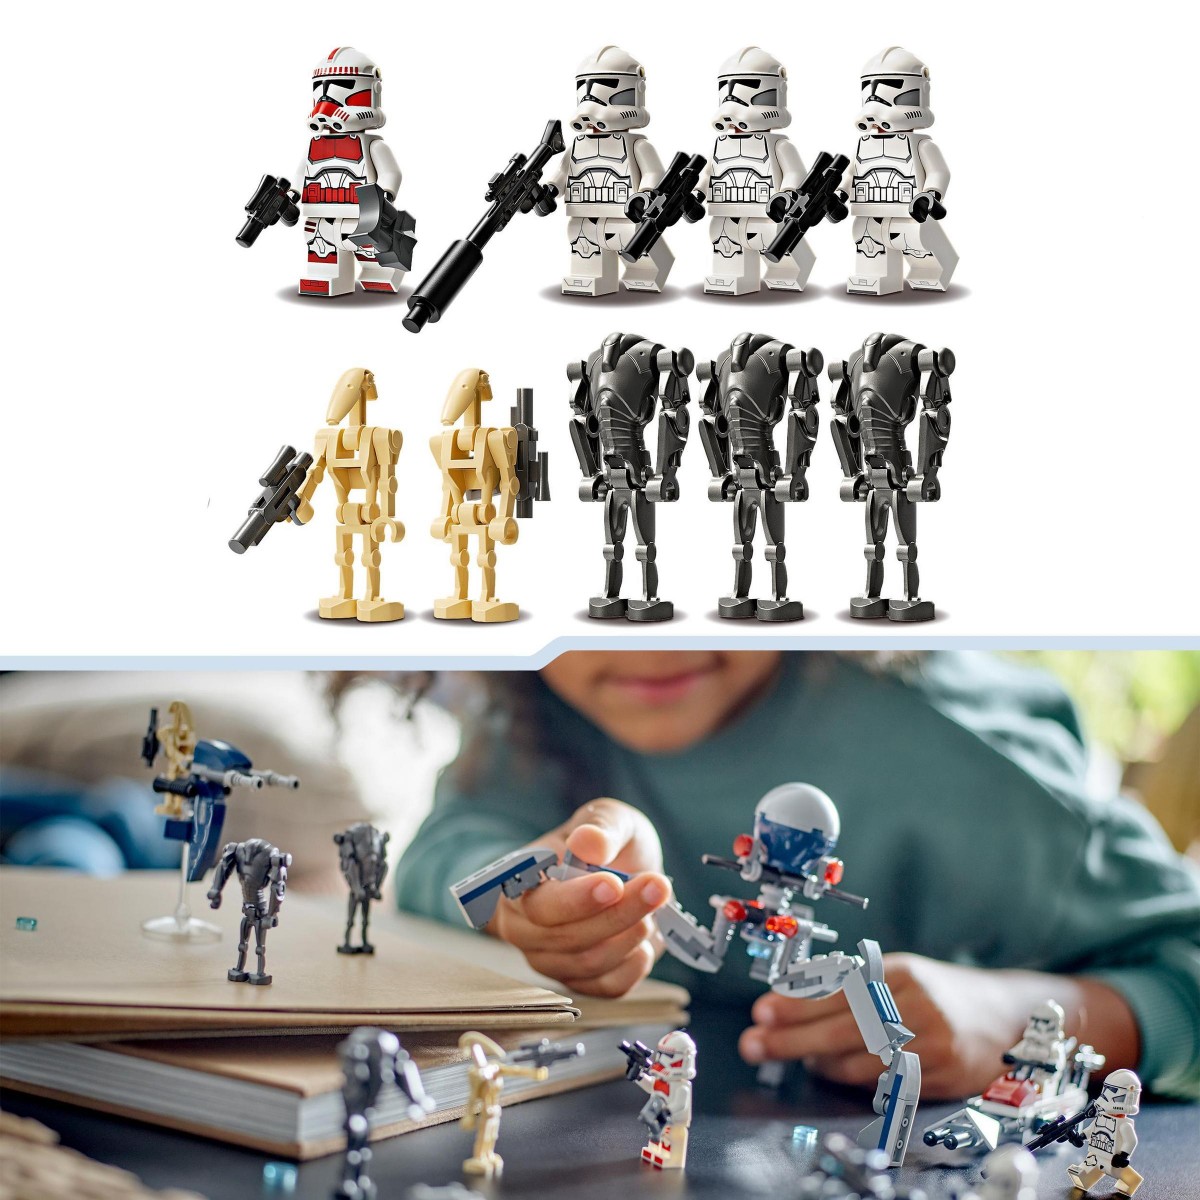 Review - LEGO Star Wars 75372 Clone Trooper & Battle Droid Battle